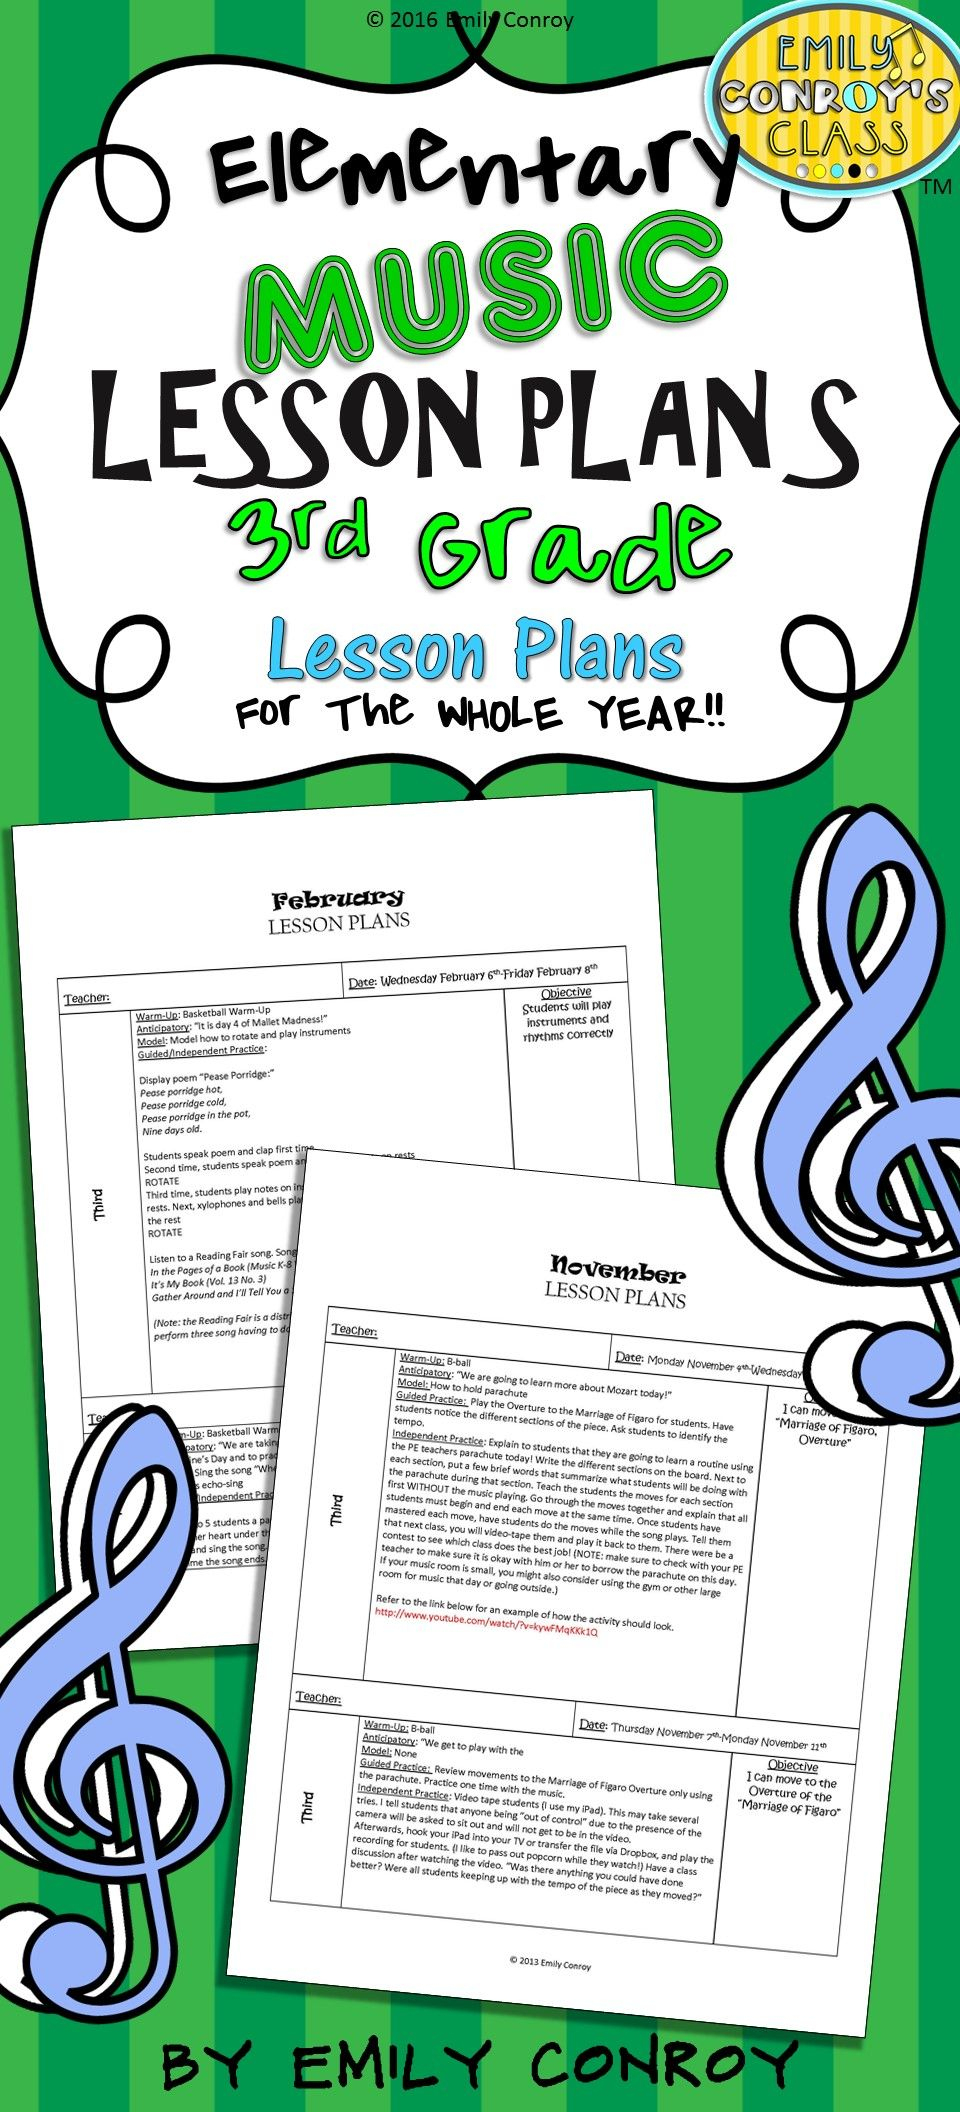 3rd-grade-music-lesson-plans-set-1-elementary-music-lesson-plans